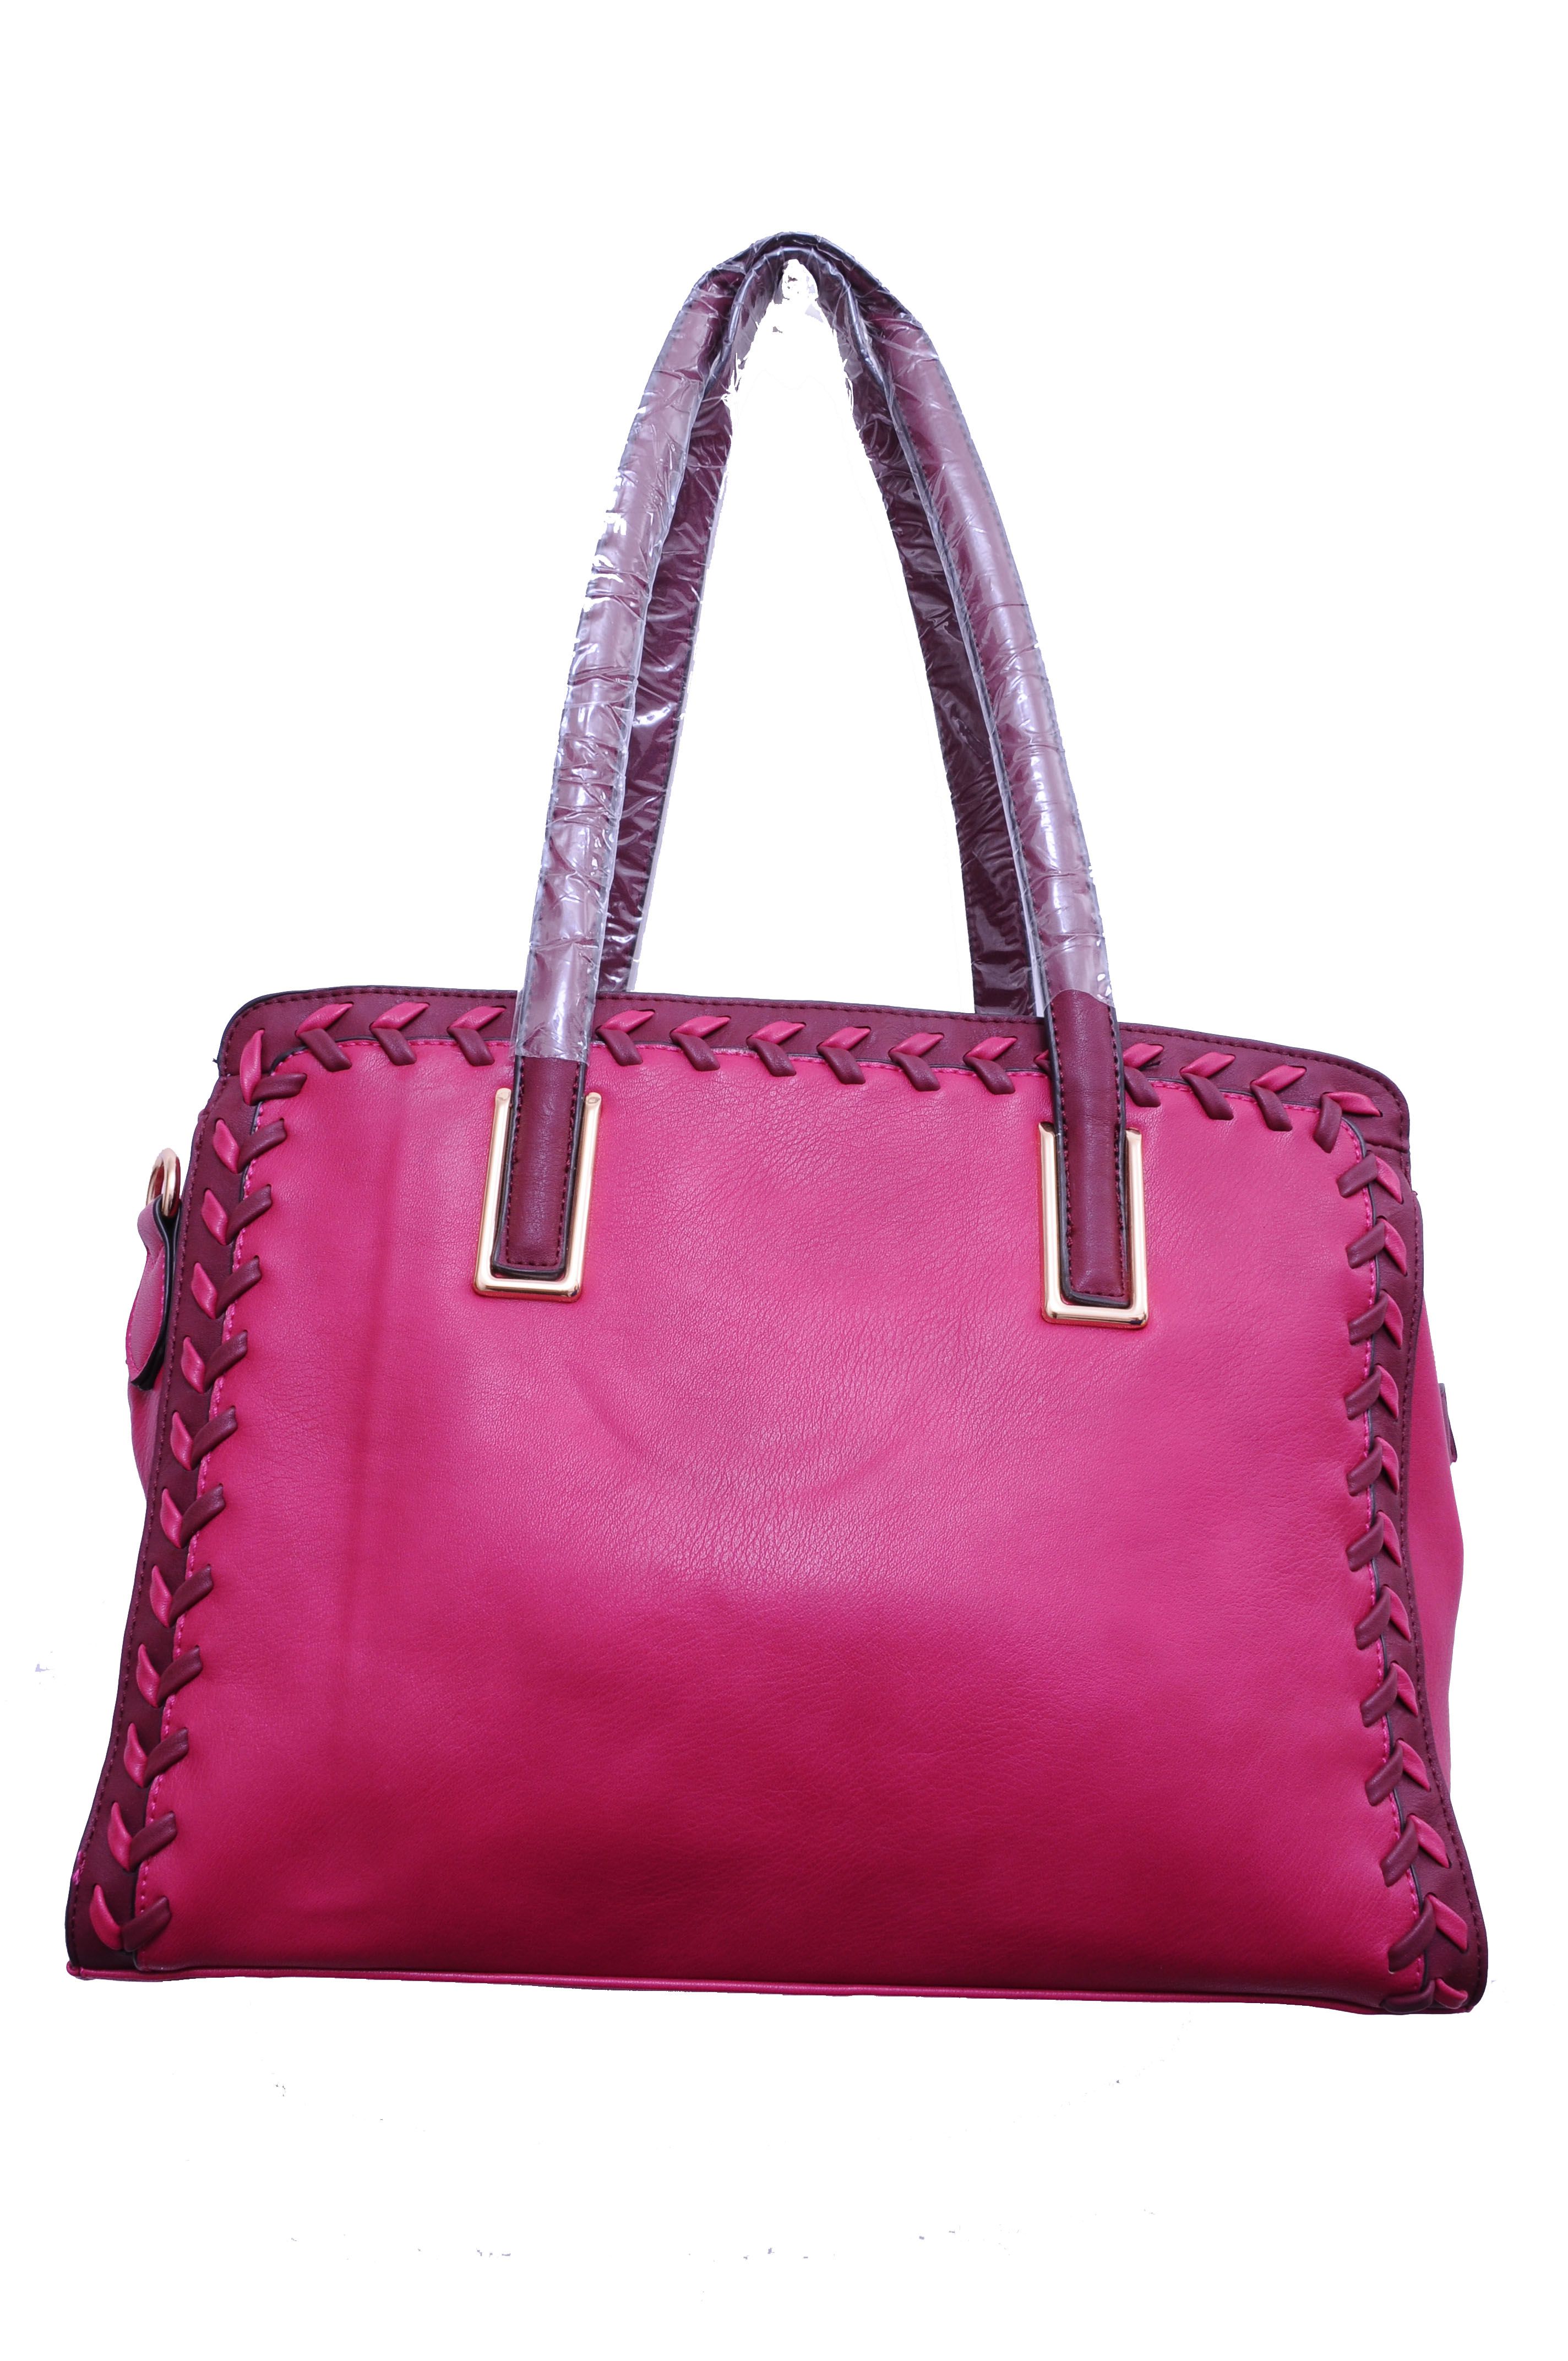 Monett Magenta Faux Leather Shoulder Bag - Buy Monett Magenta Faux ...